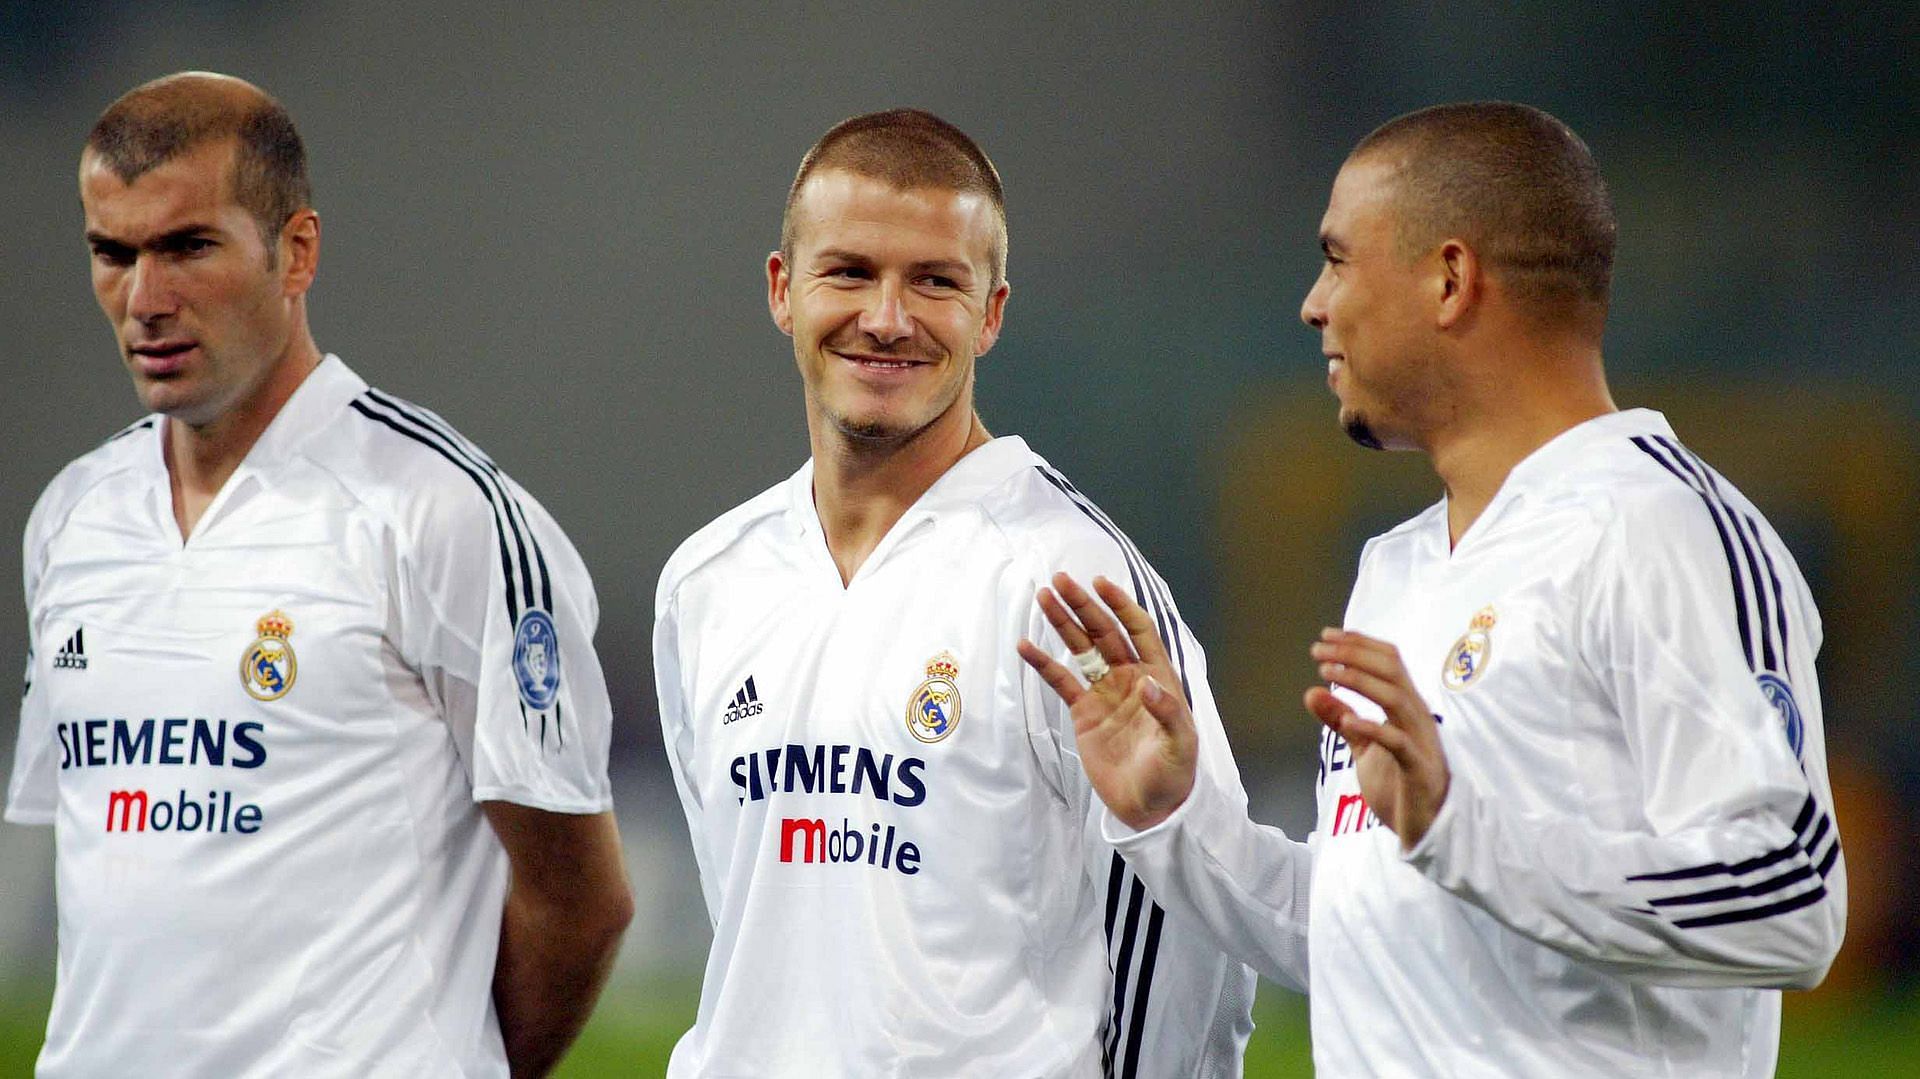 (L-R) Zinedine Zidane, David Beckham and Ronaldo Nazario